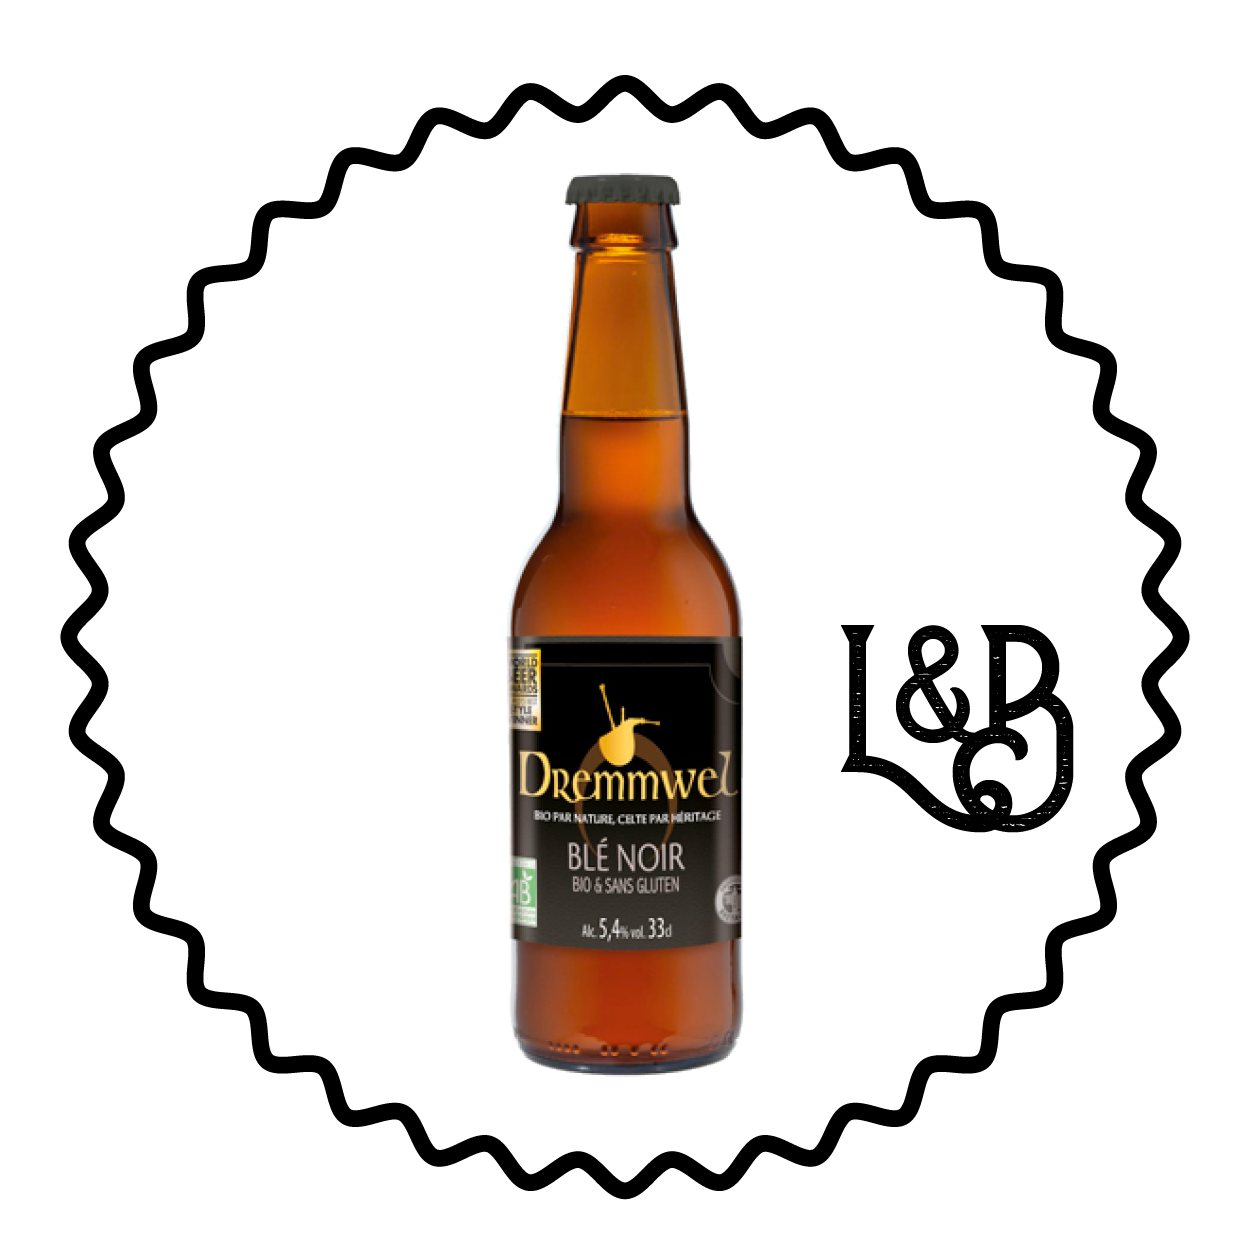 3083010911_95_dremmwel-gwiniz-du-pression-meilleure-biere-laser-beers.png